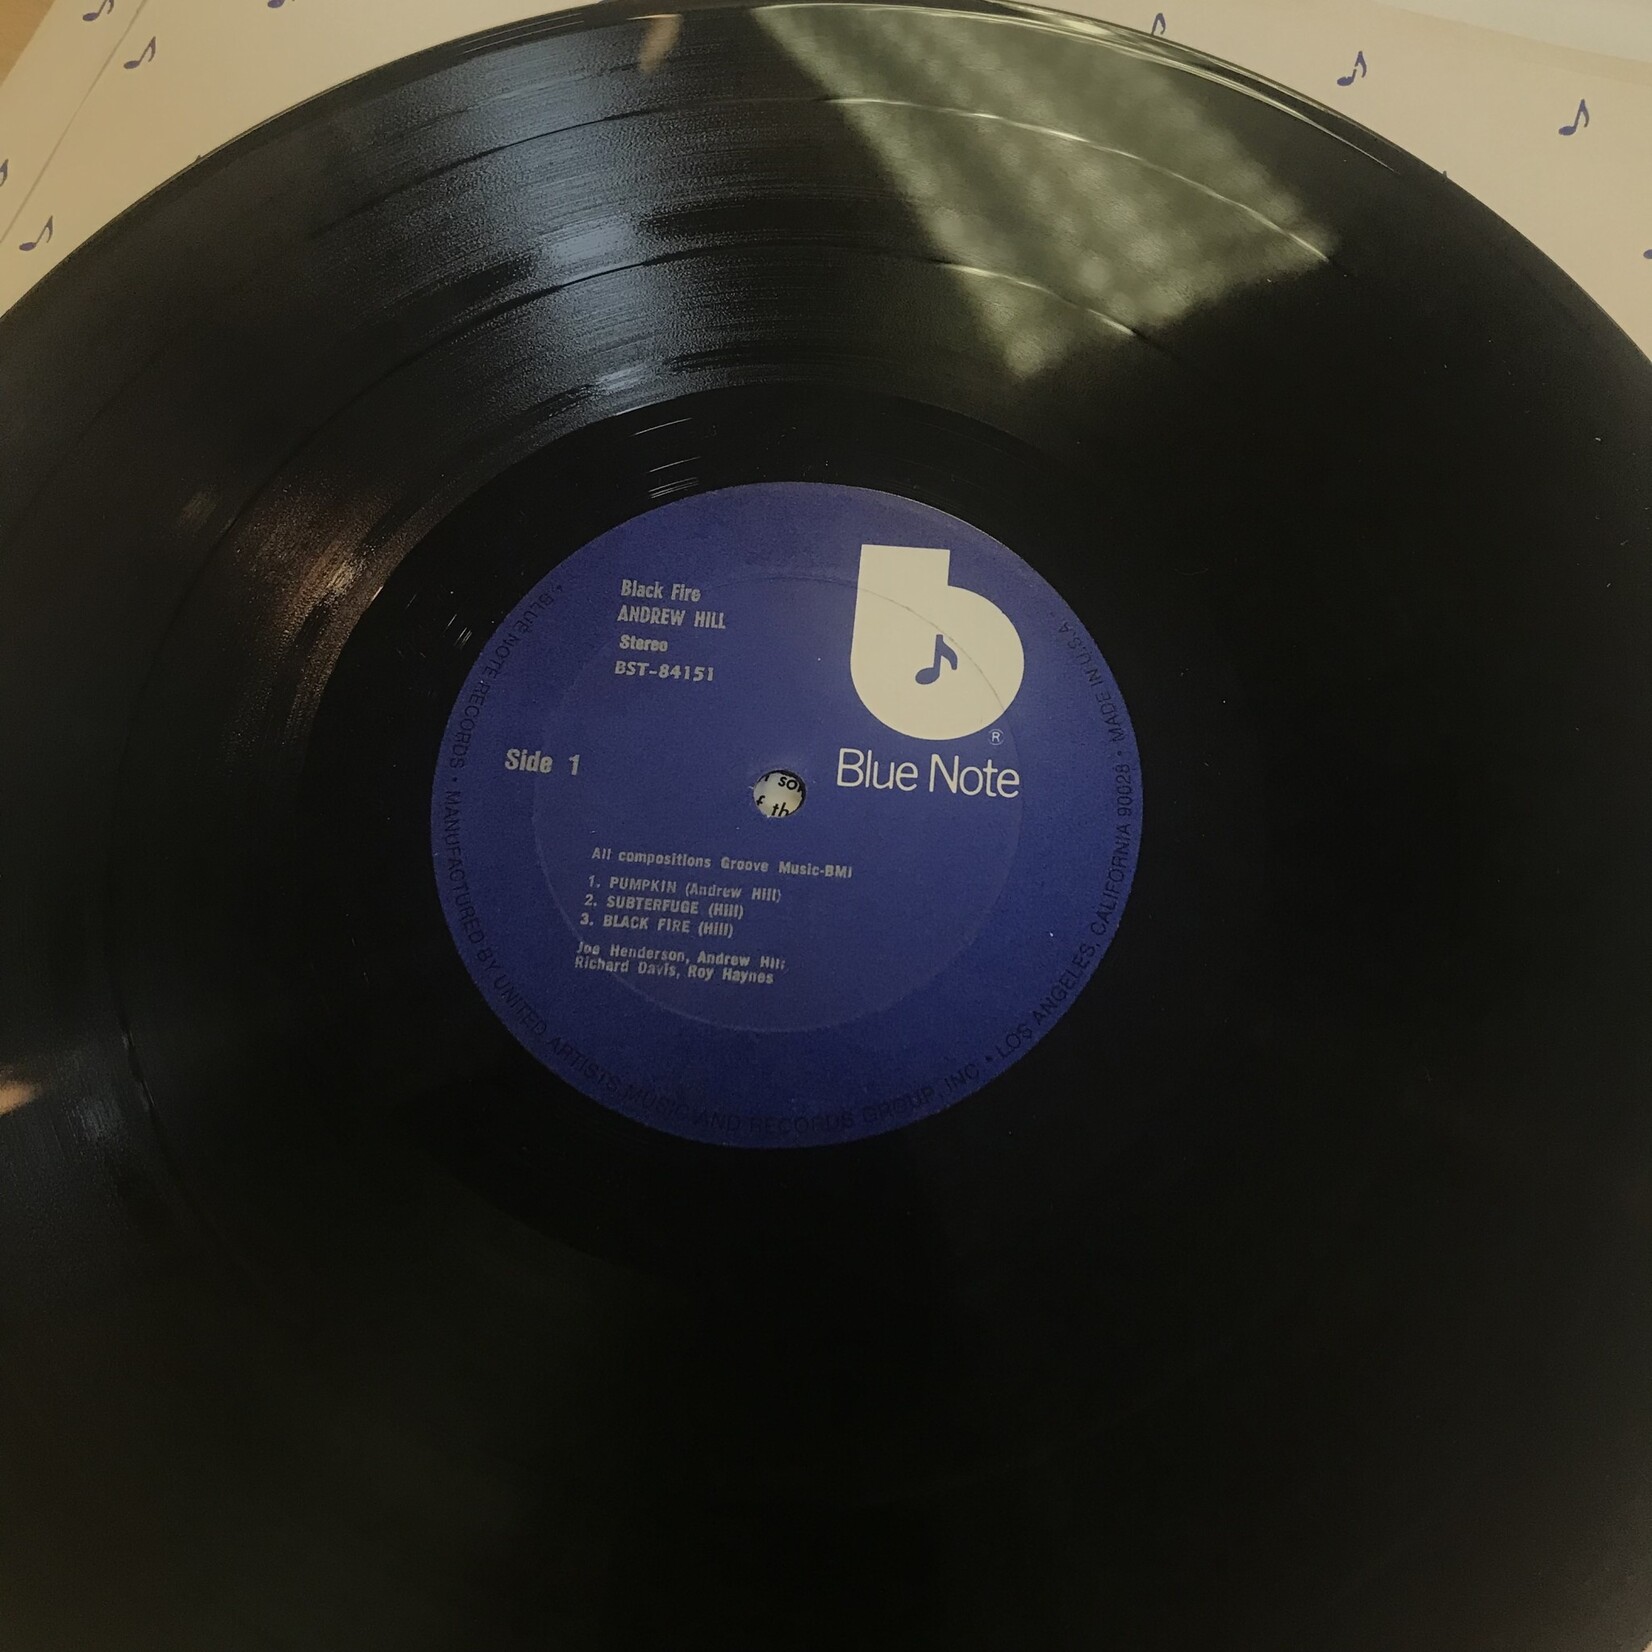 Andrew Hill - Black Fire - BST 84151 - Vinyl LP (USED)